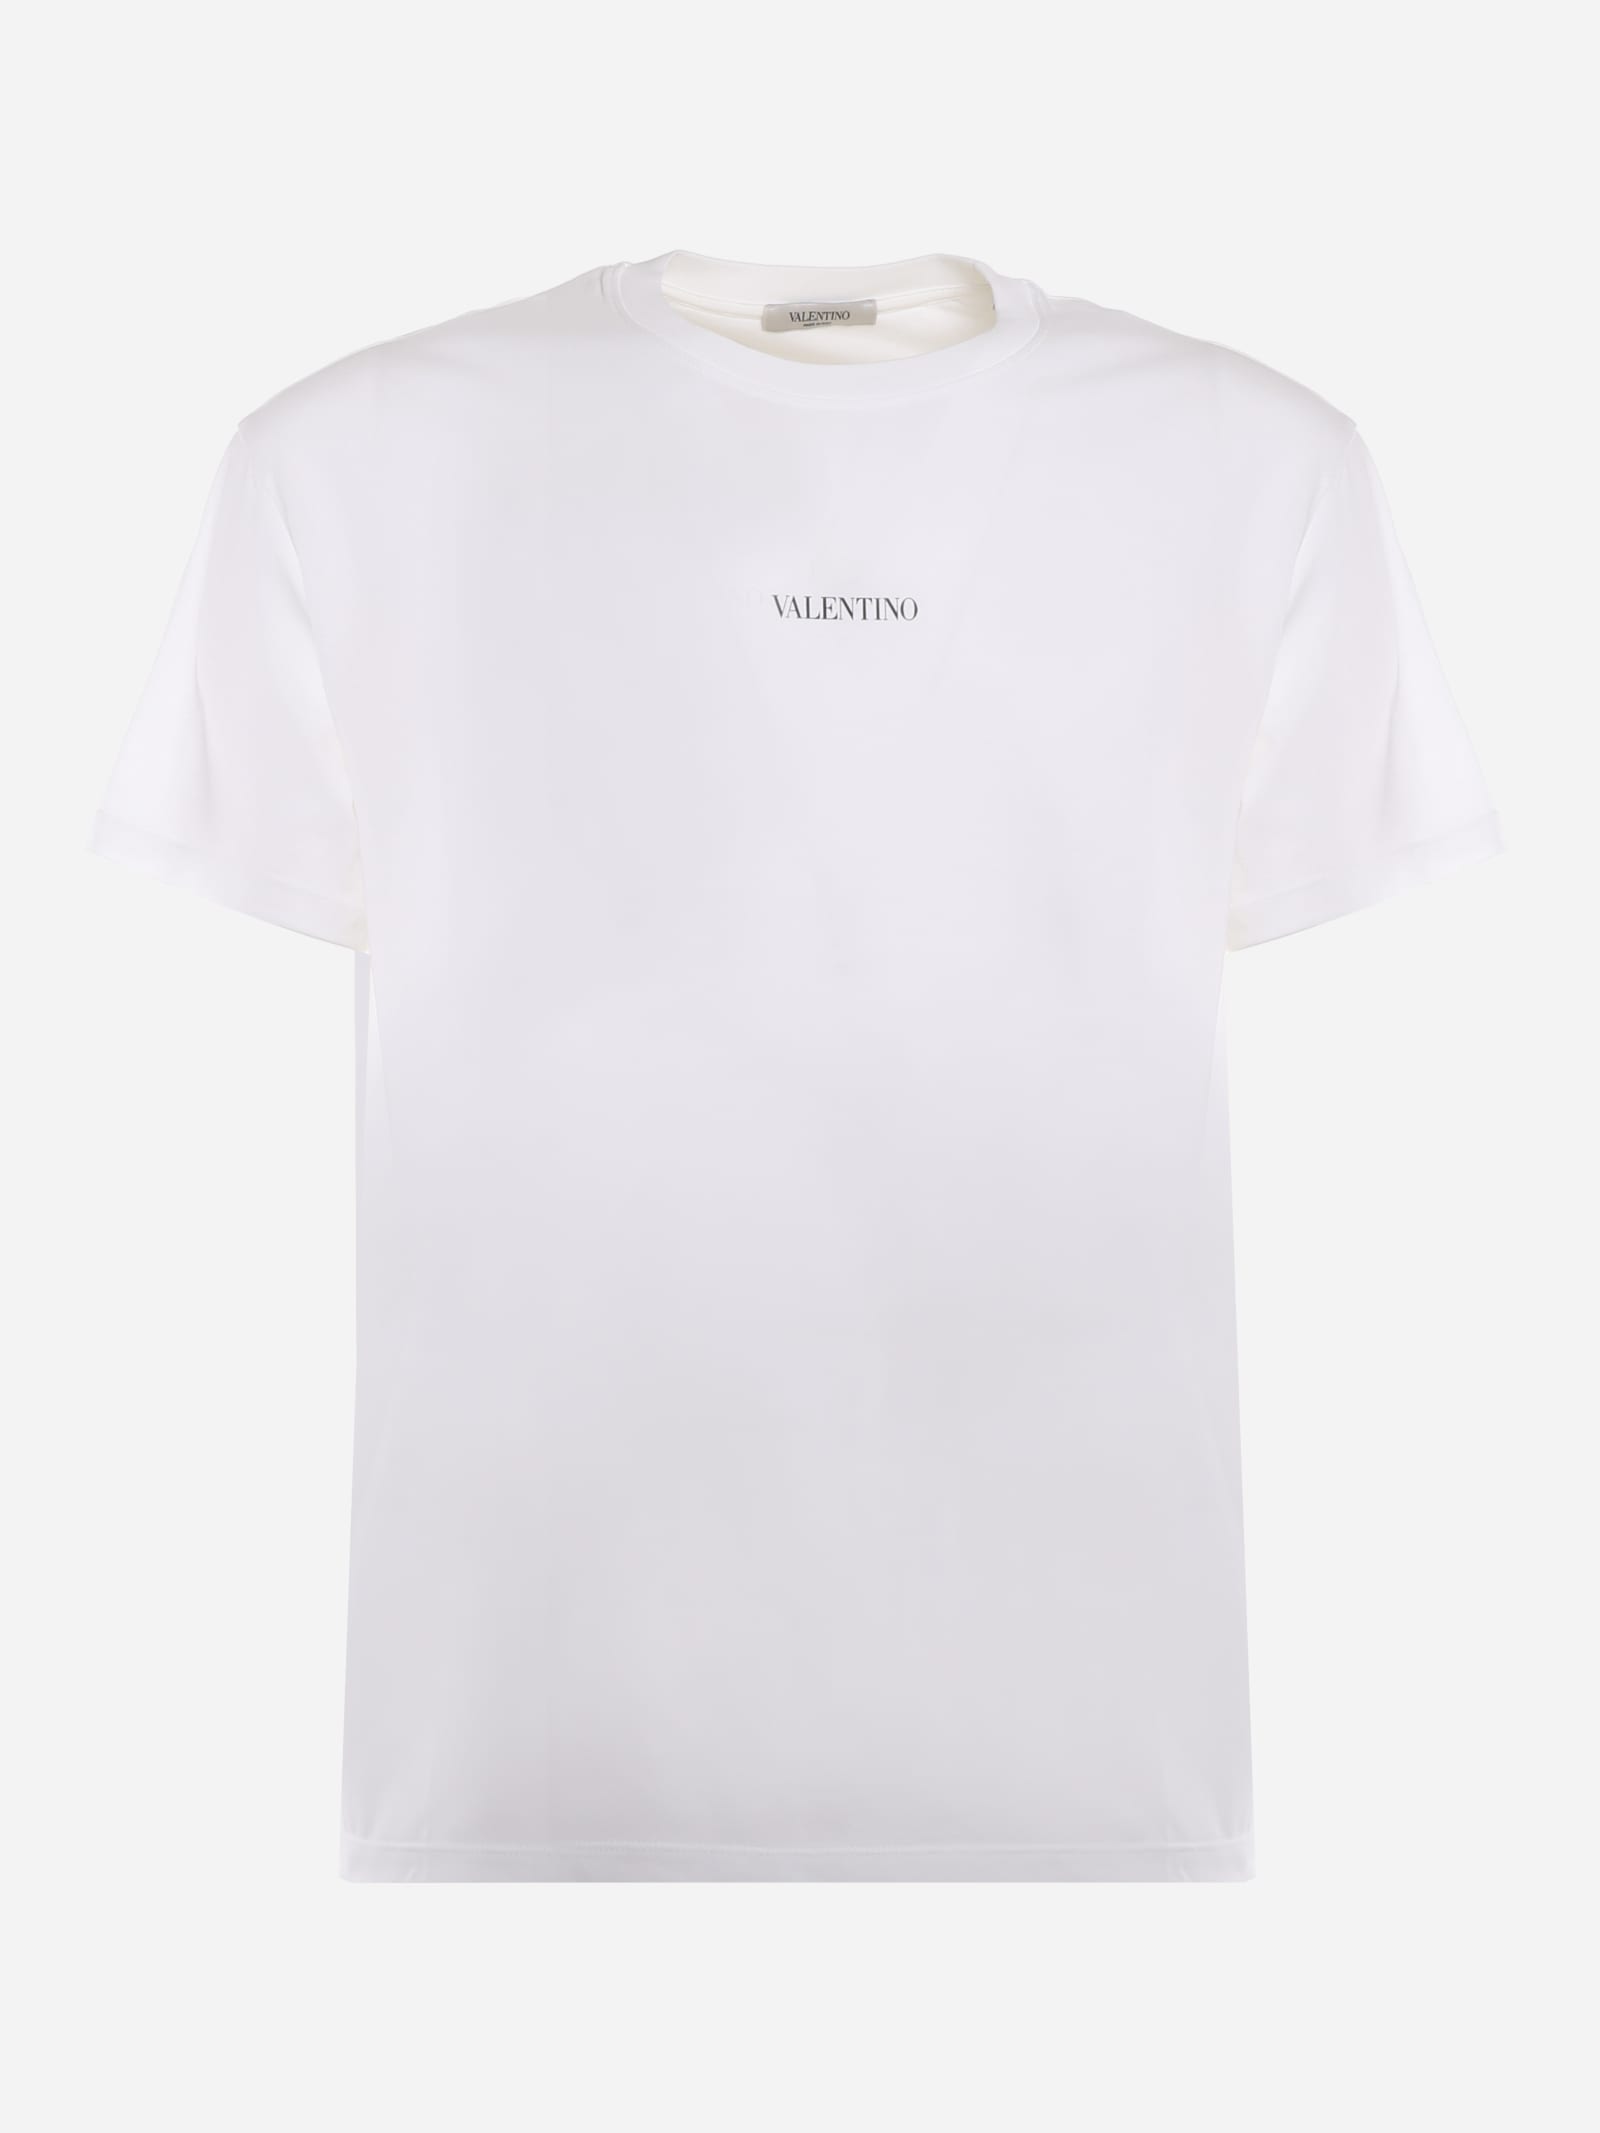 Cotton T-shirt With Valentino Print